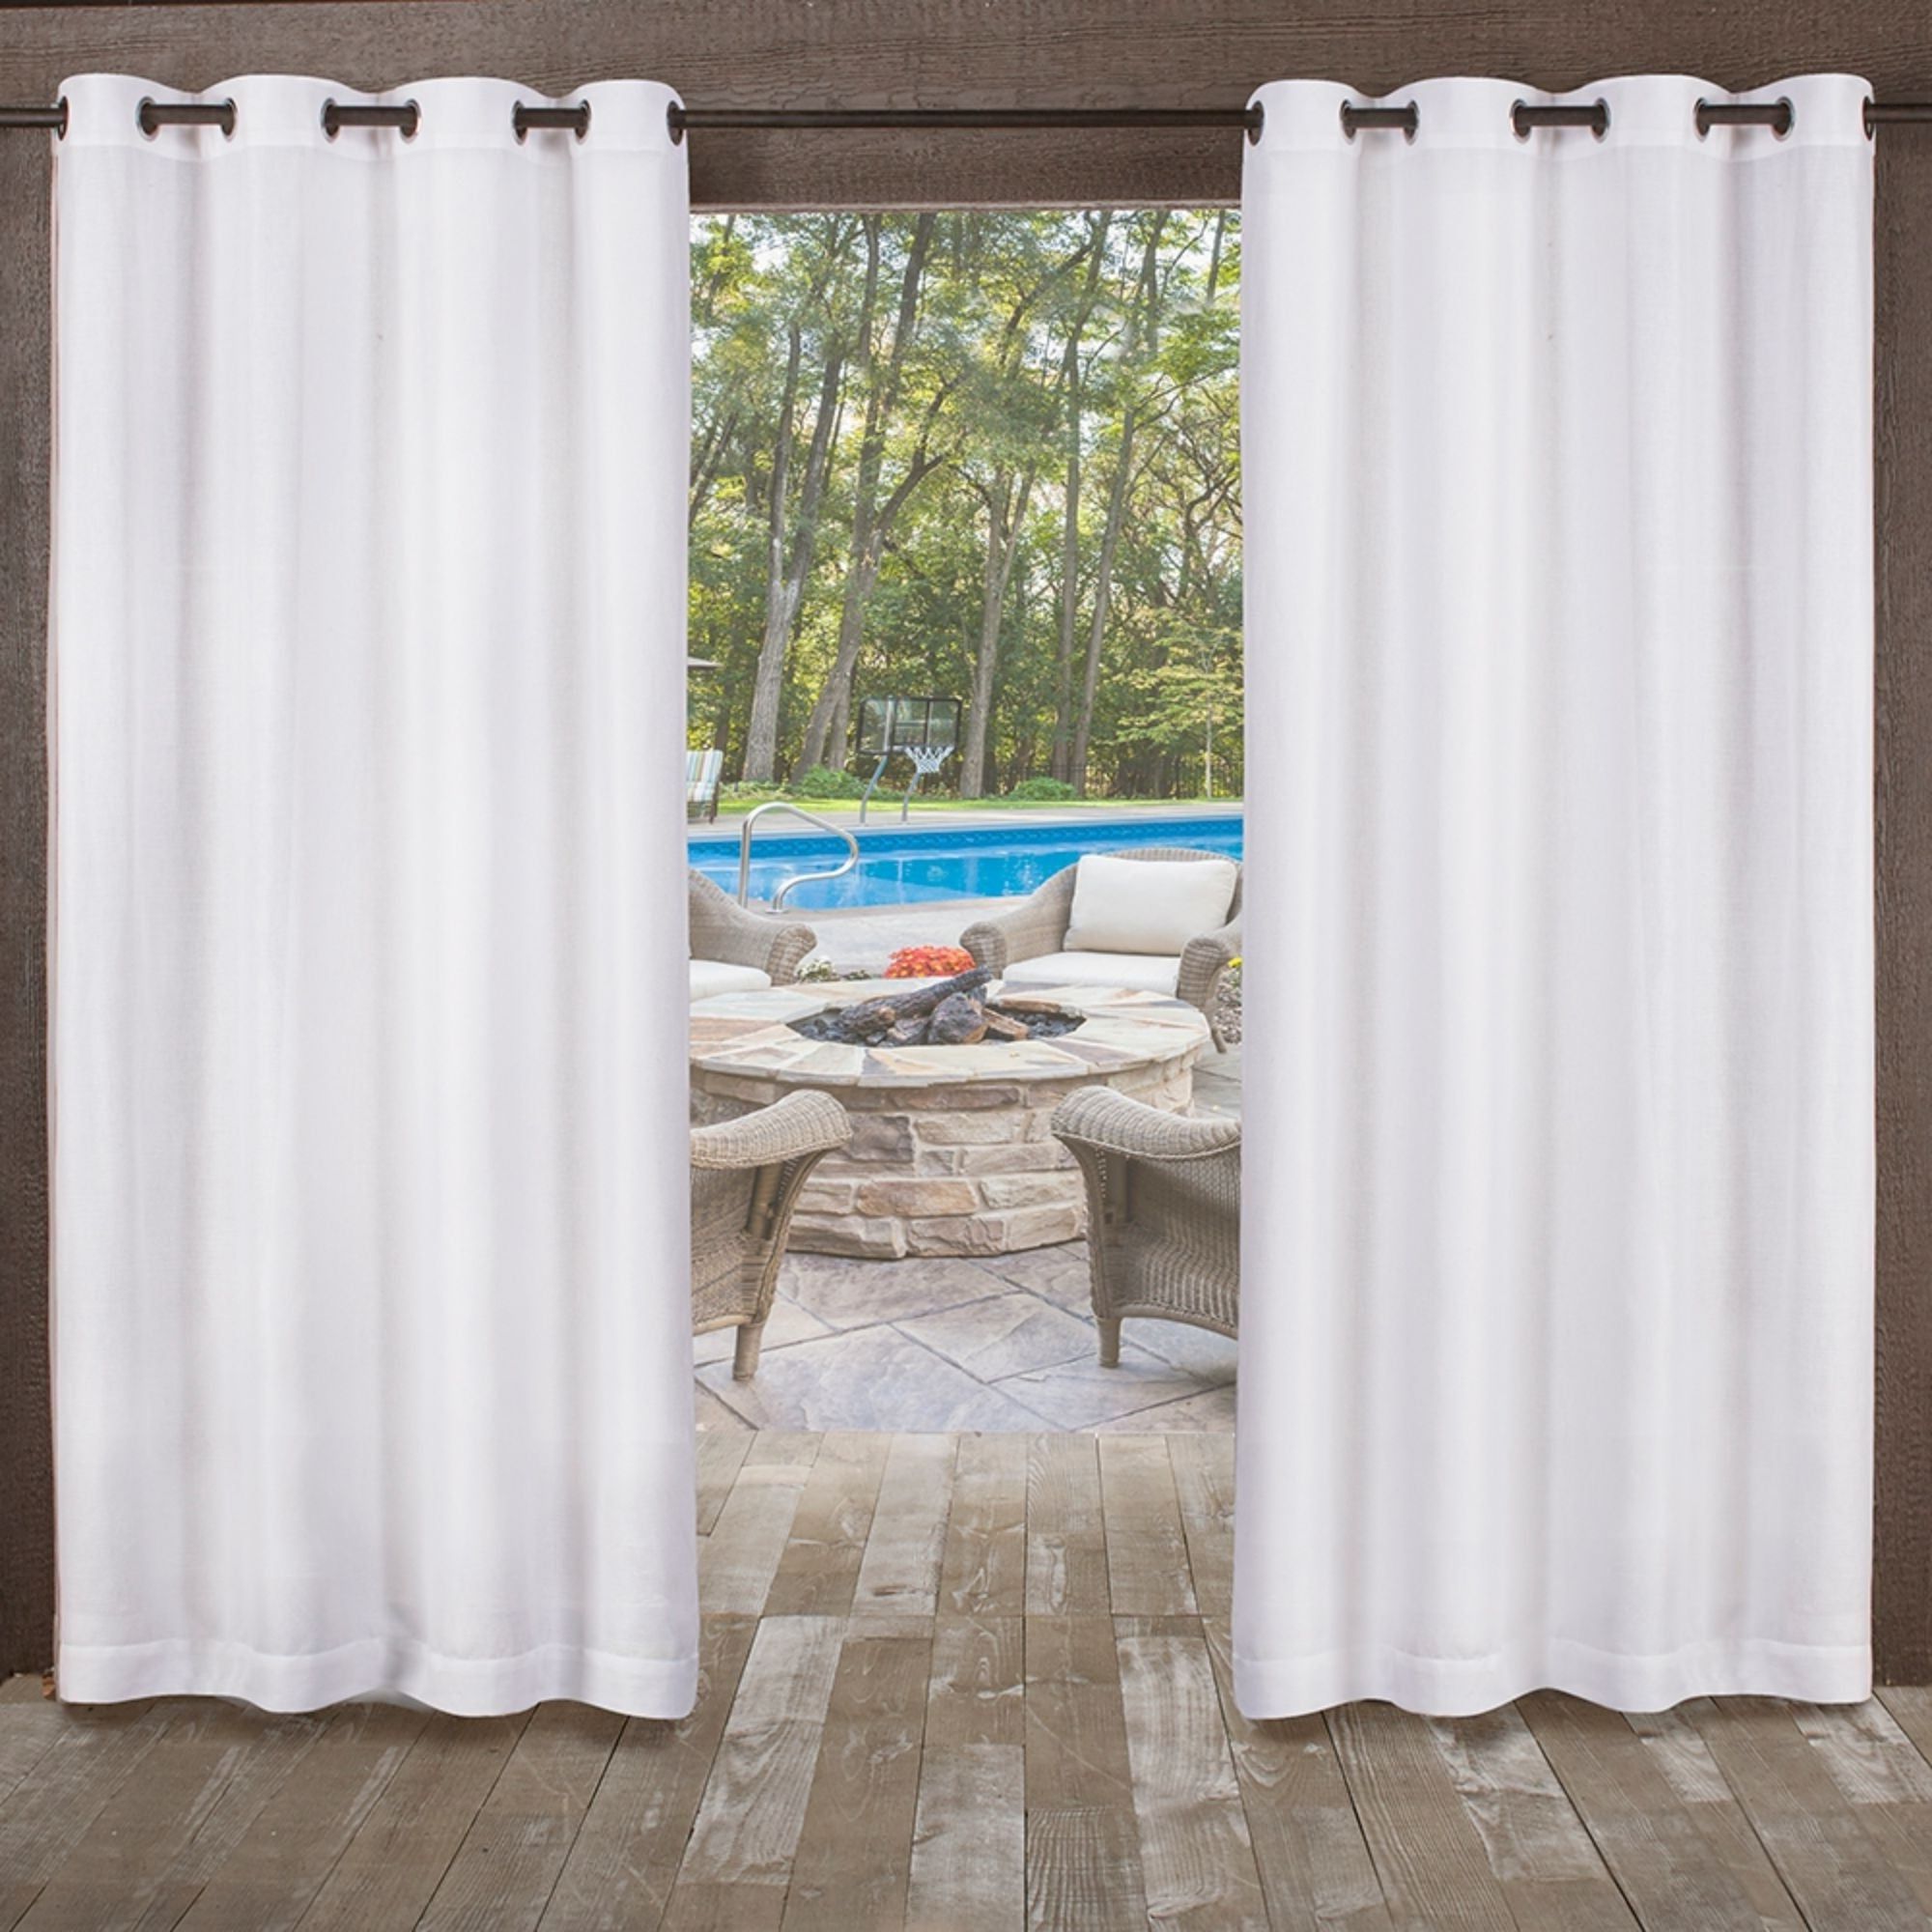 Newest Ati Home Miami Indoor/outdoor Grommet Top Curtain Panel Pair With Indoor/outdoor Solid Cabana Grommet Top Curtain Panel Pairs (View 19 of 20)